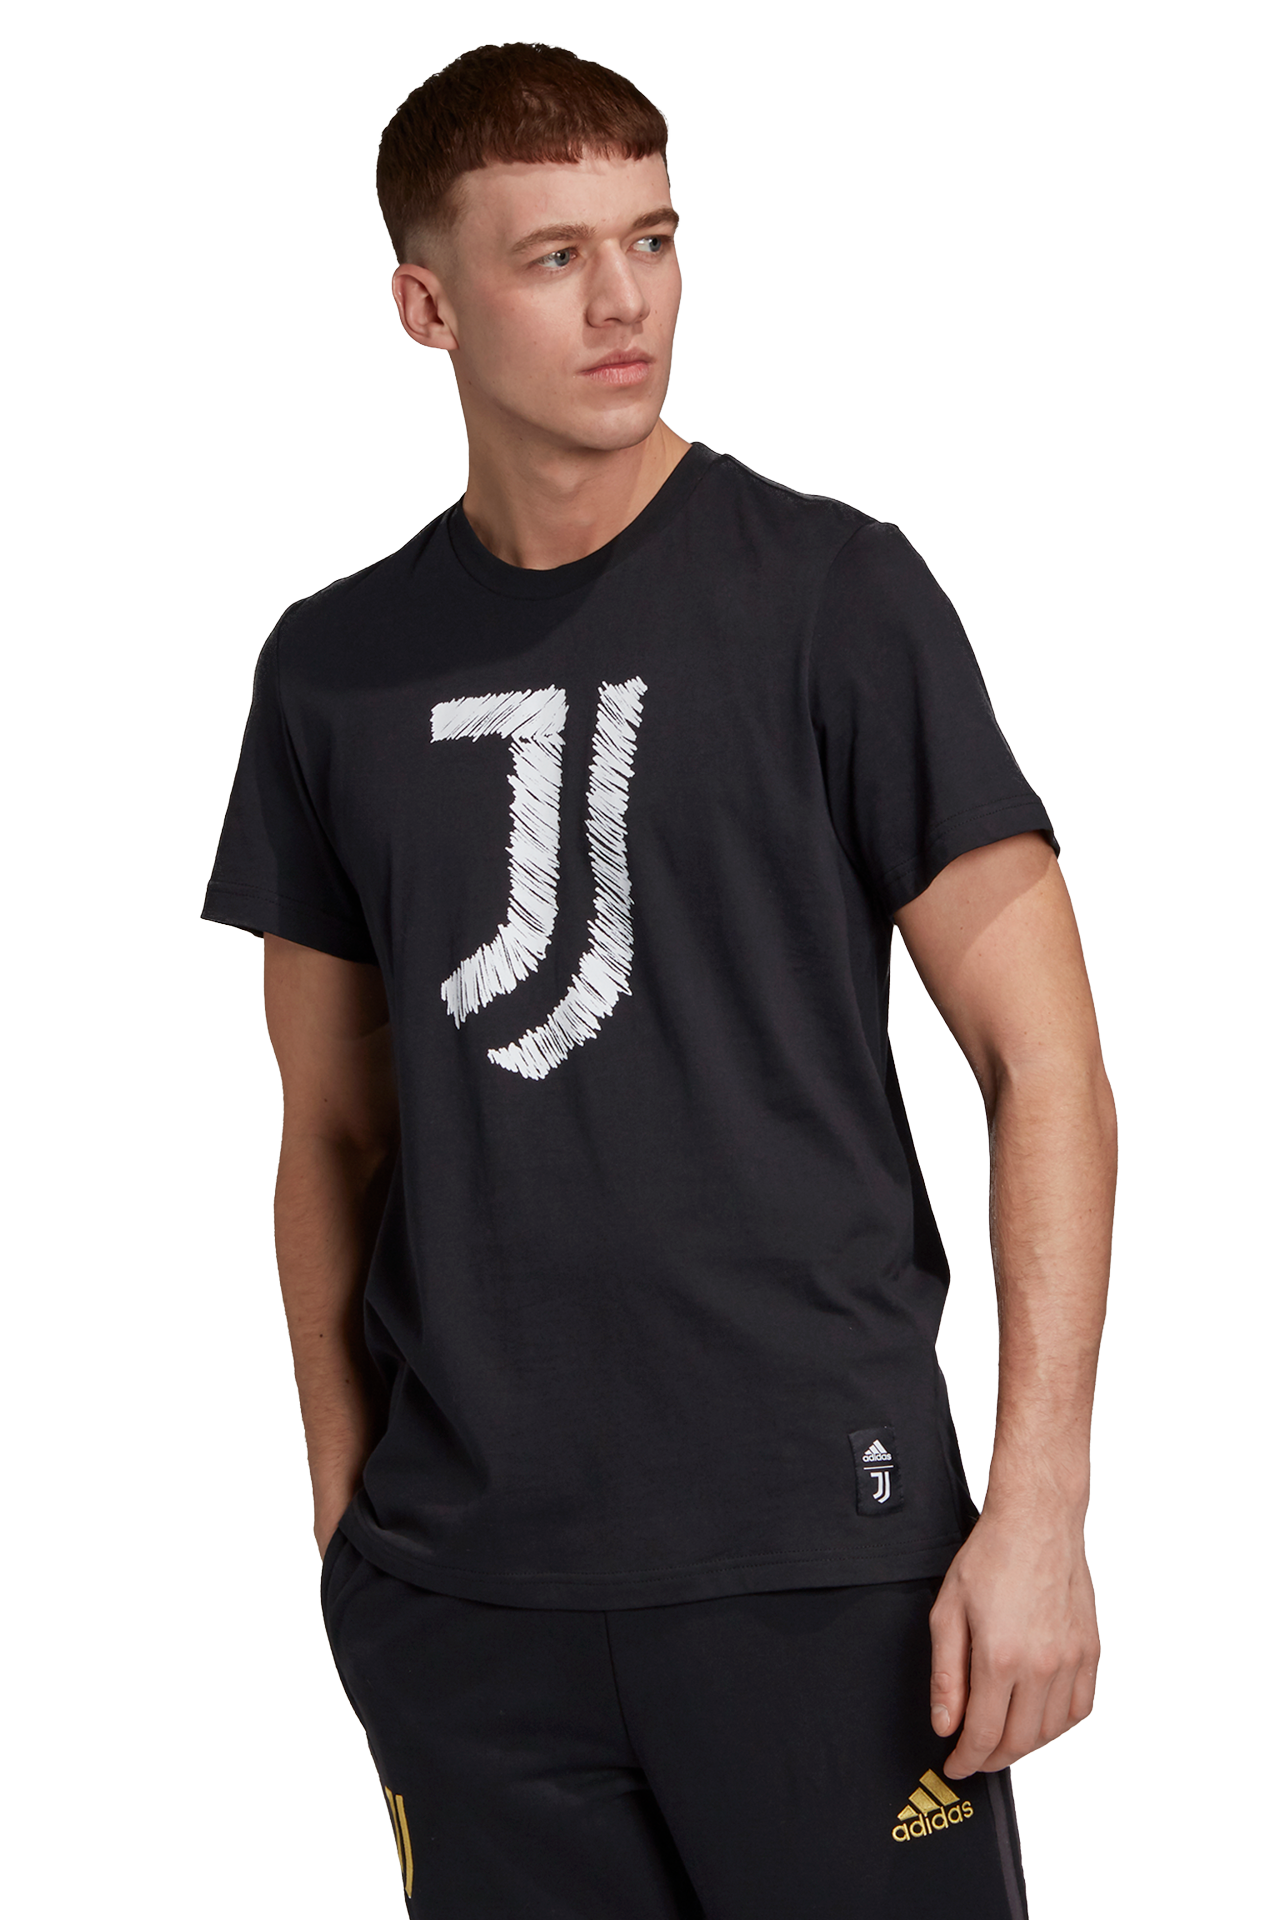 Juventus T-Shirt DNA Graphic Campionato 2019/20 Uomo